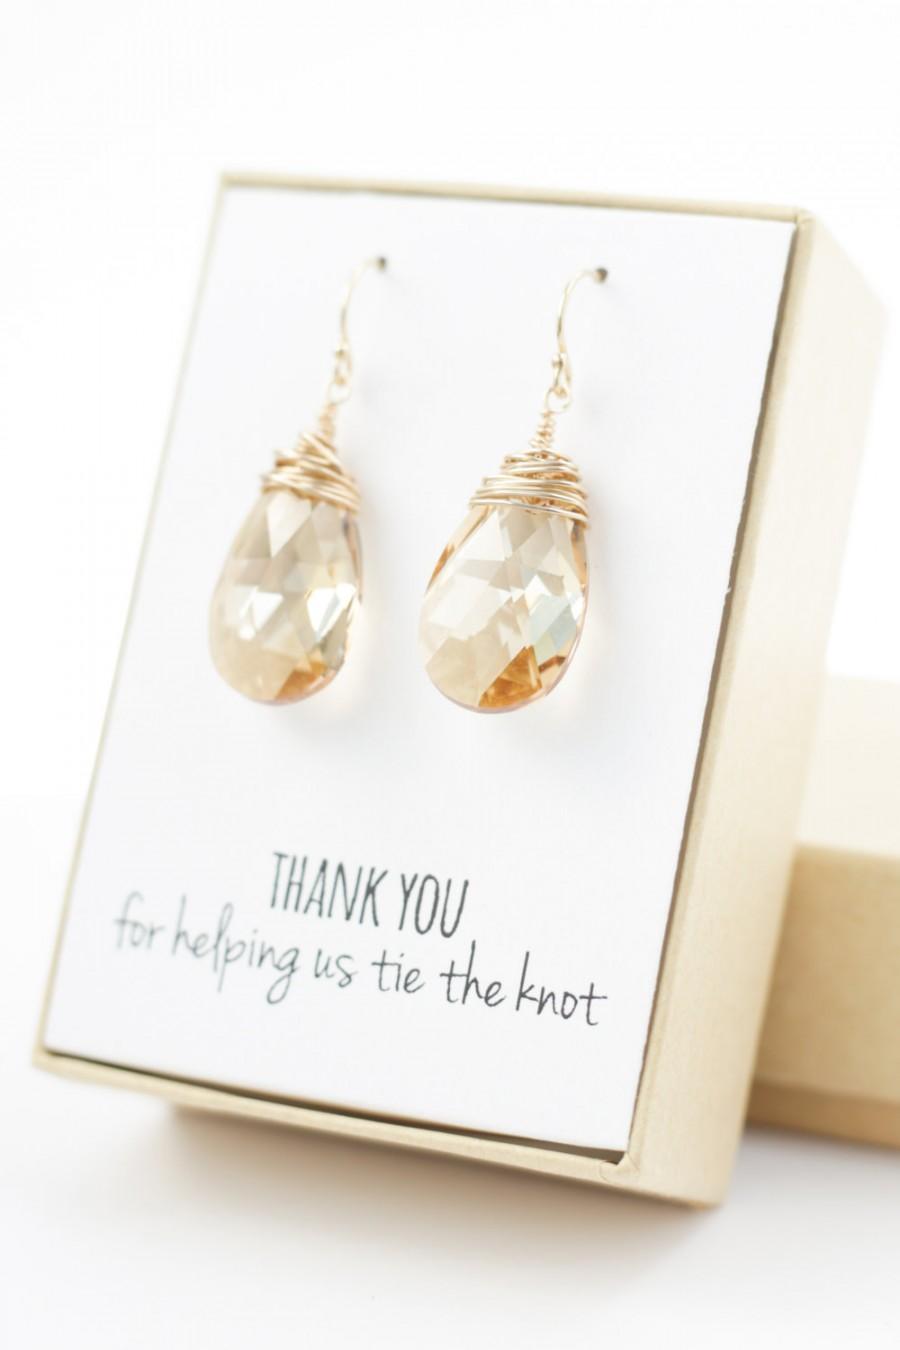 زفاف - Champagne Gold Swarovski Crystal Earrings - Large Crystal Earrings - Champagne Swarovski Earrings - Wire-Wrapped - Bridesmaid Earrings Gift